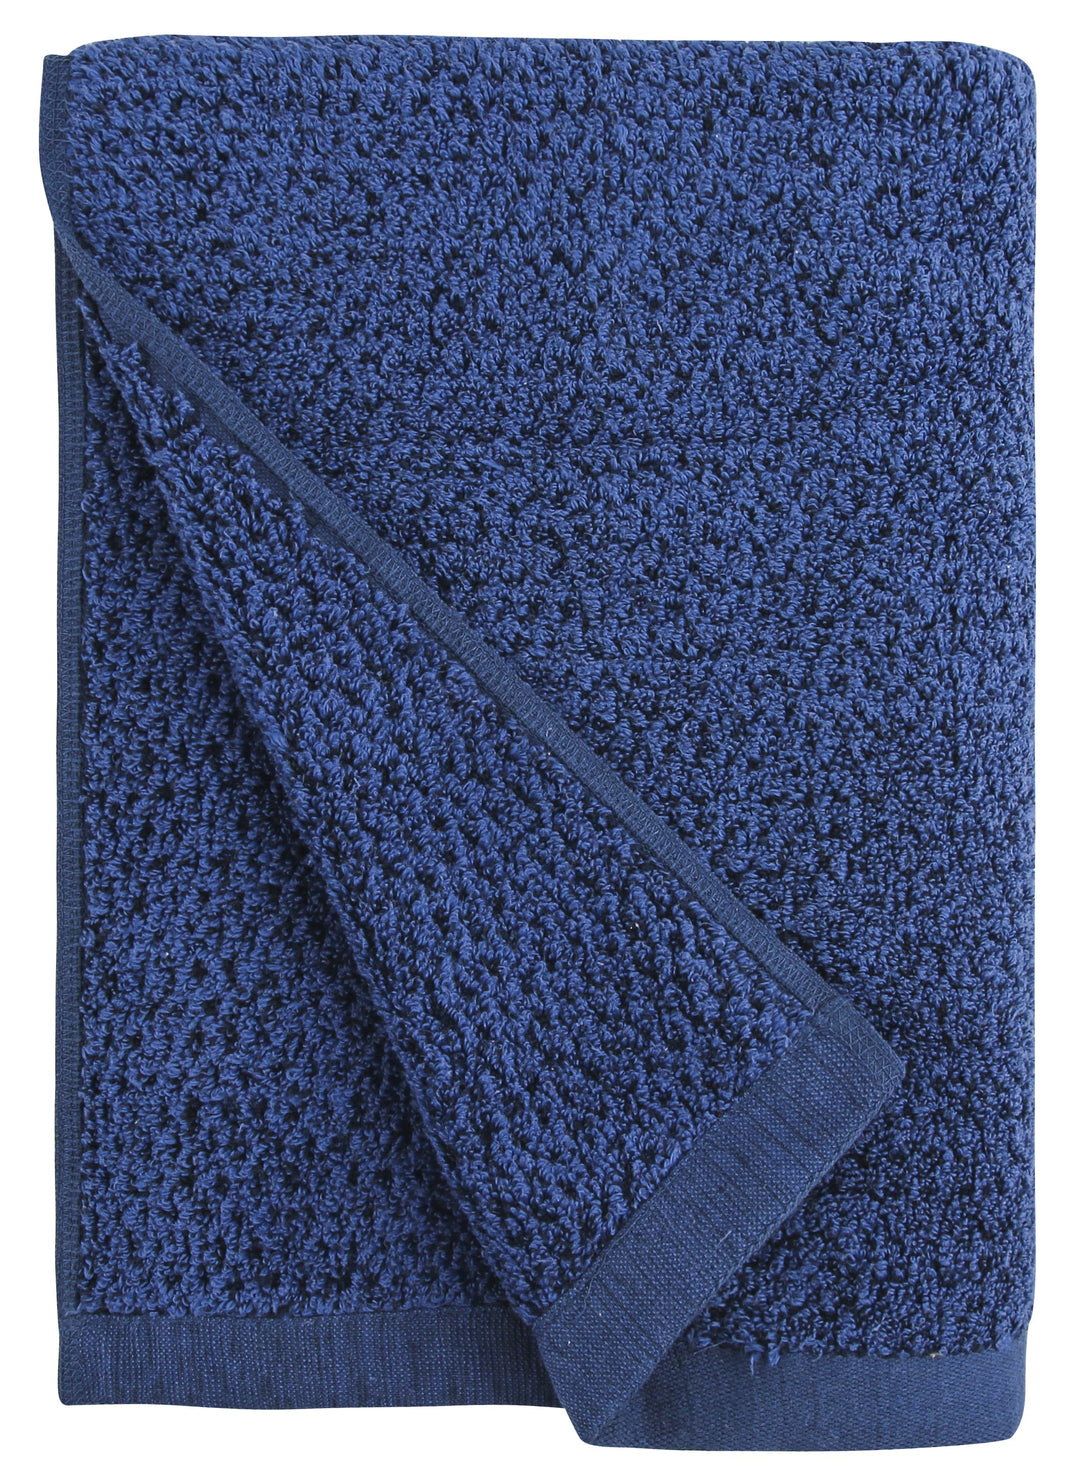 Everplush Diamond Jacquard Bath Towel - Soft & Quick-Drying Towel